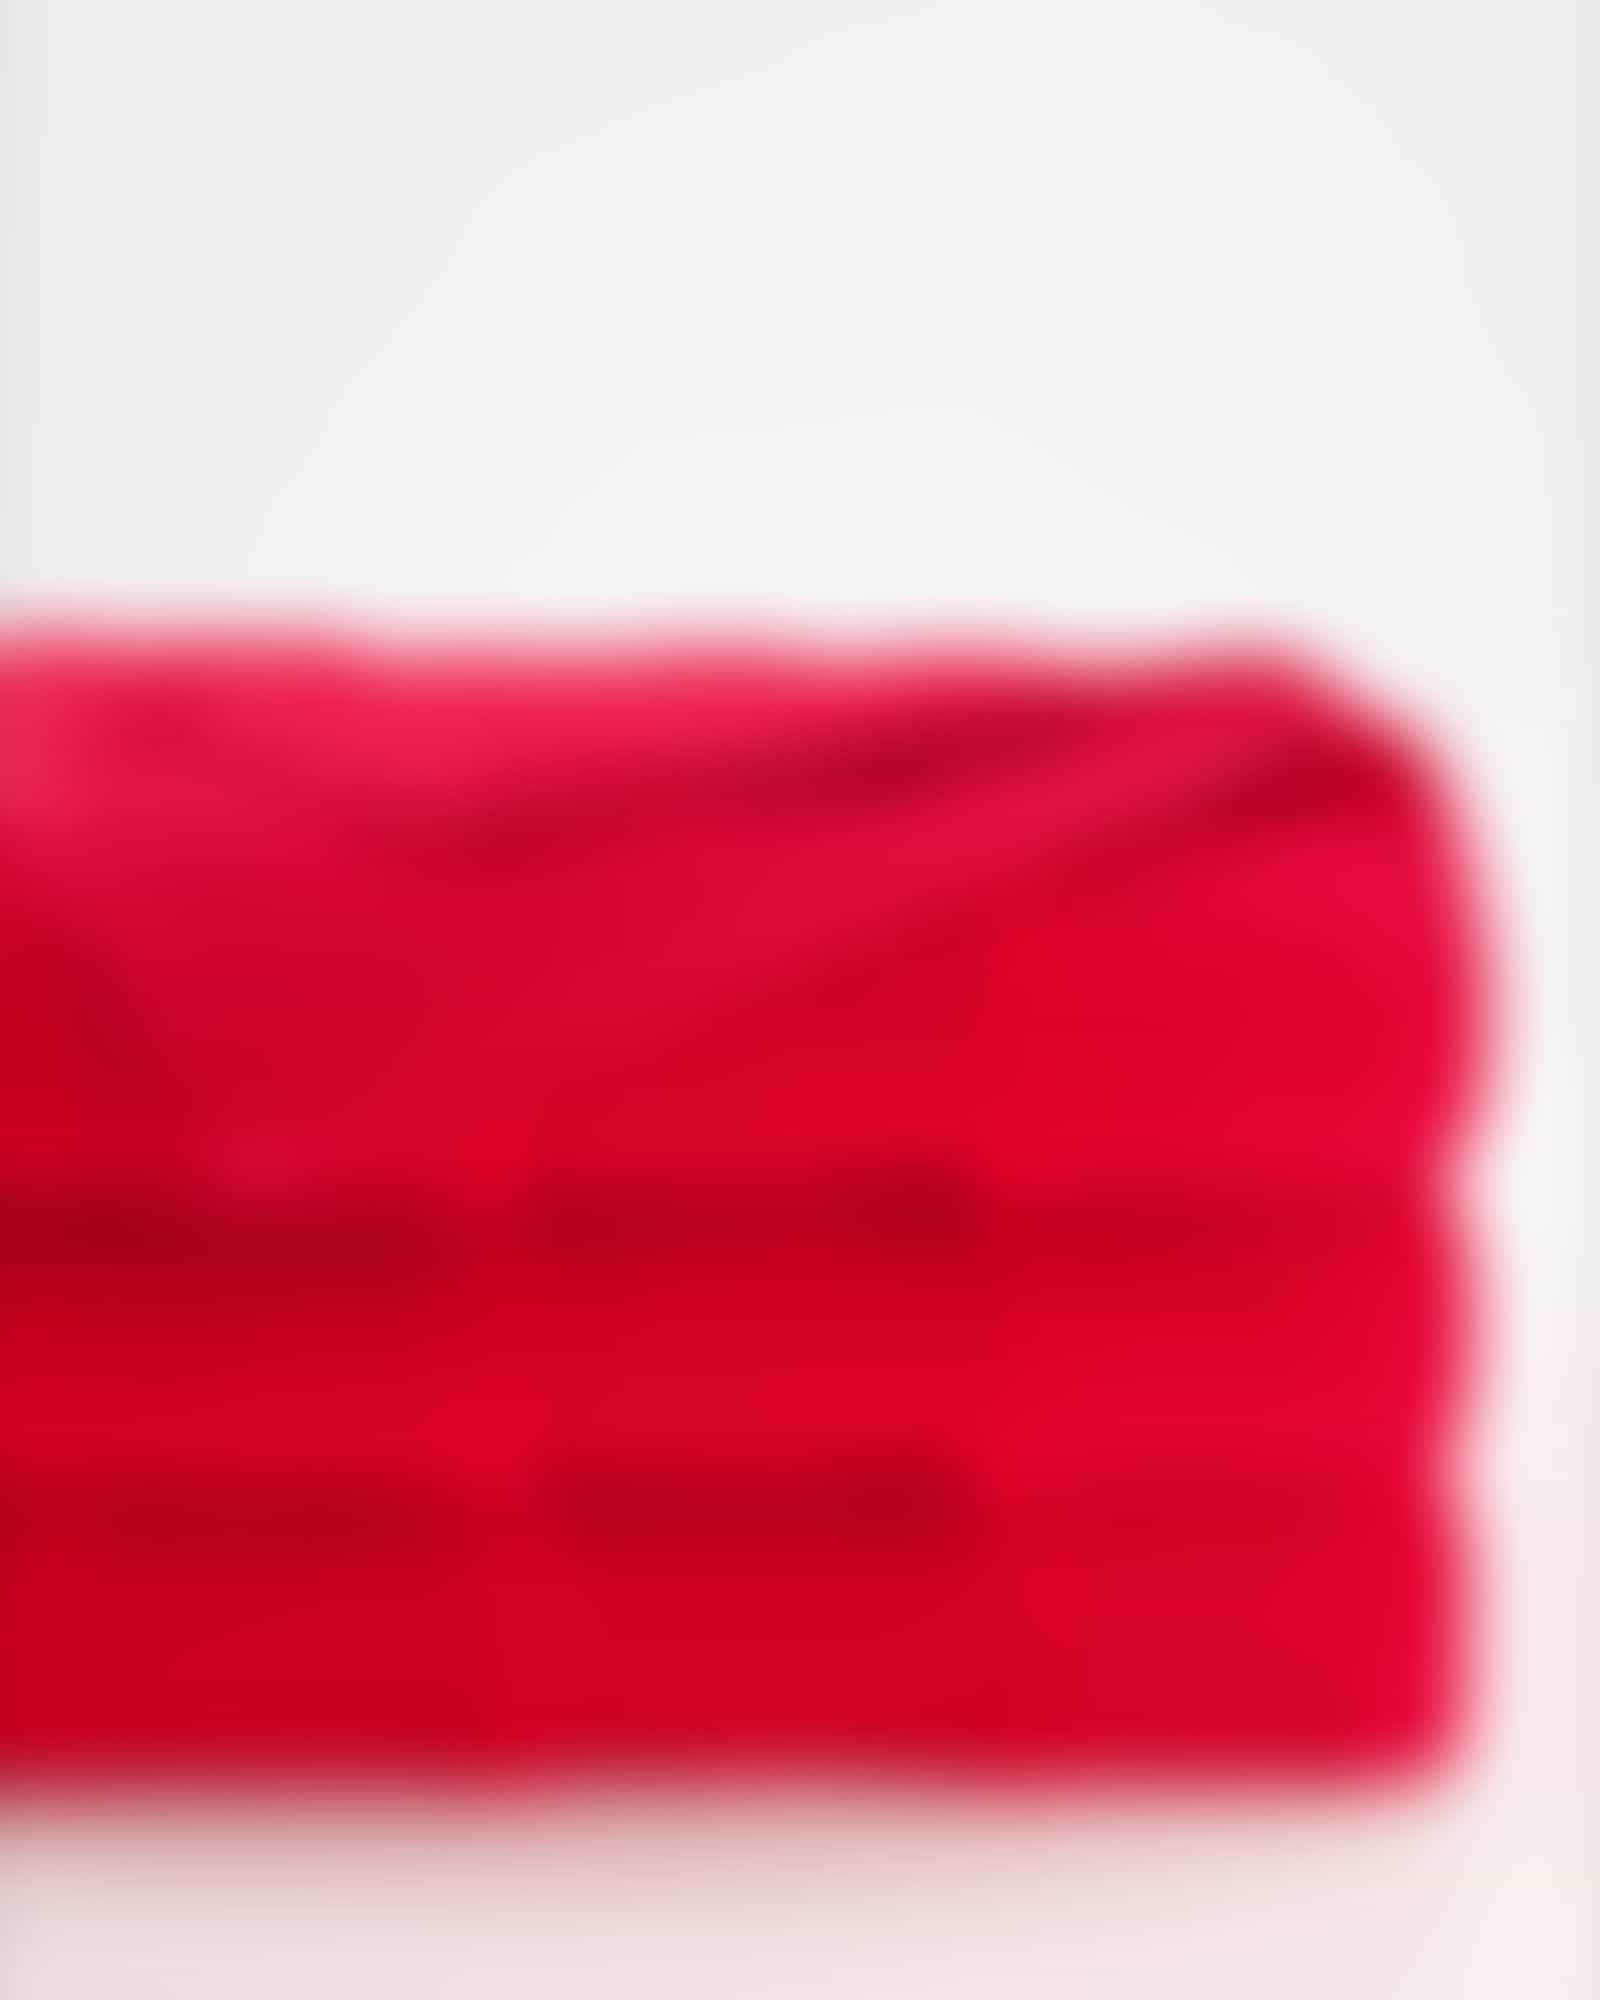 Cawö - Noblesse Uni 1001 - Farbe: 203 - rot - Gästetuch 30x50 cm